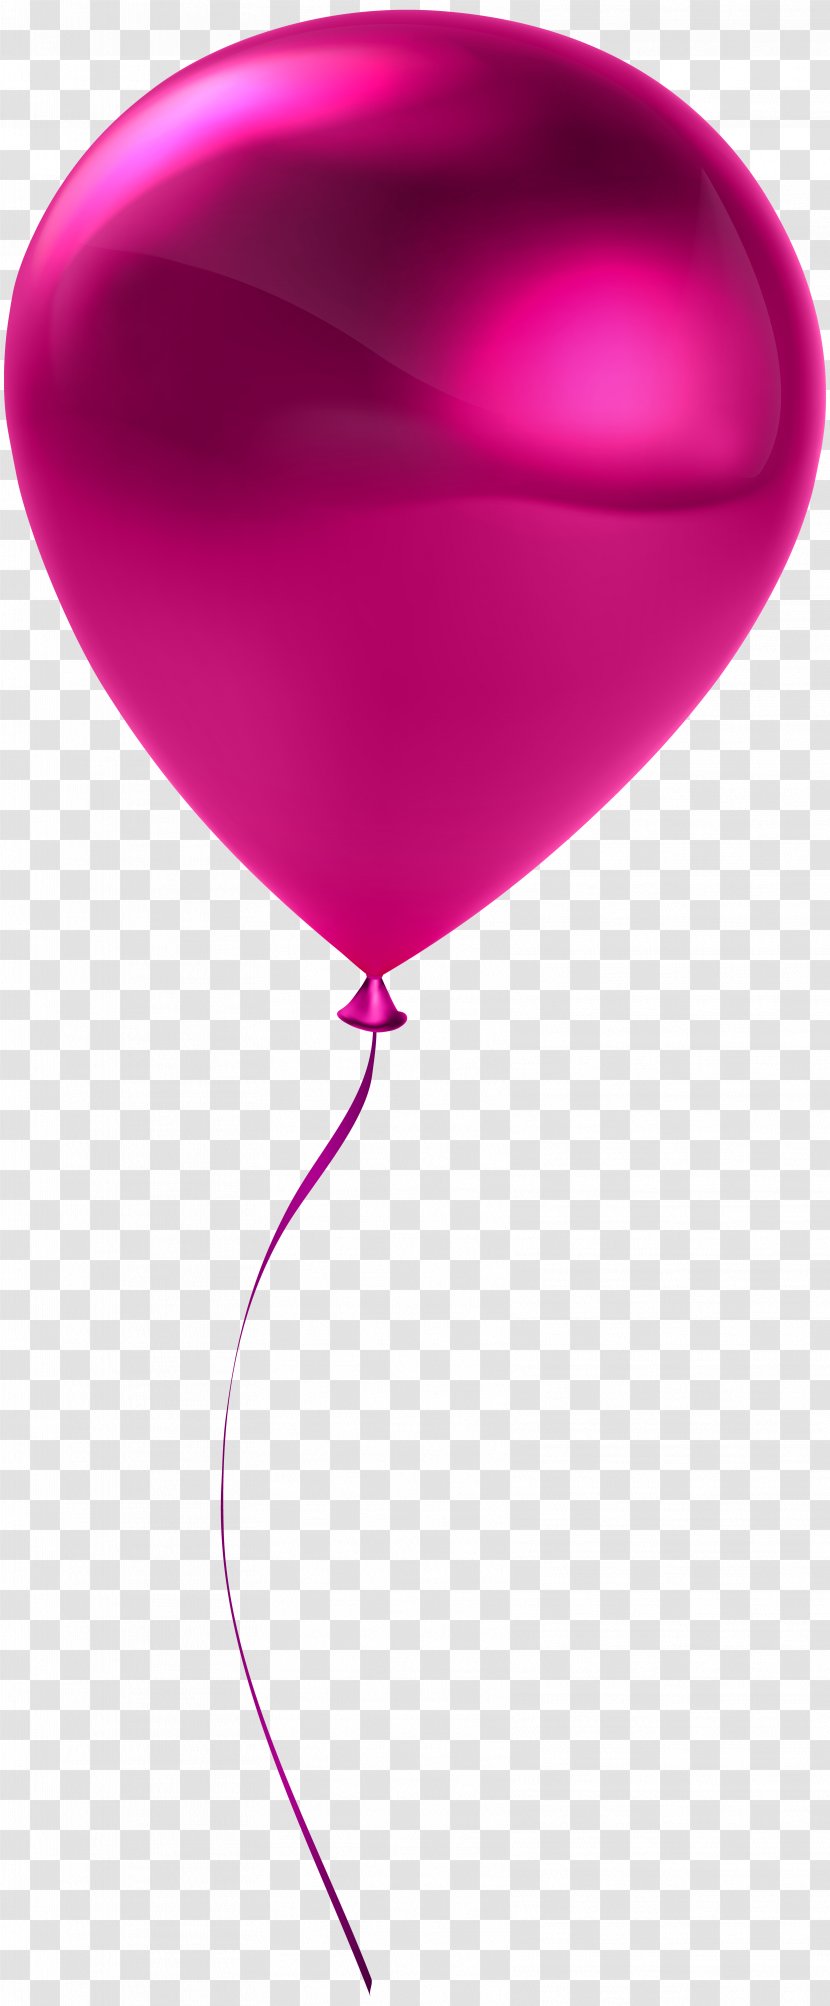 Red Heart Balloon - Single Pink Transparent Clip Art Transparent PNG